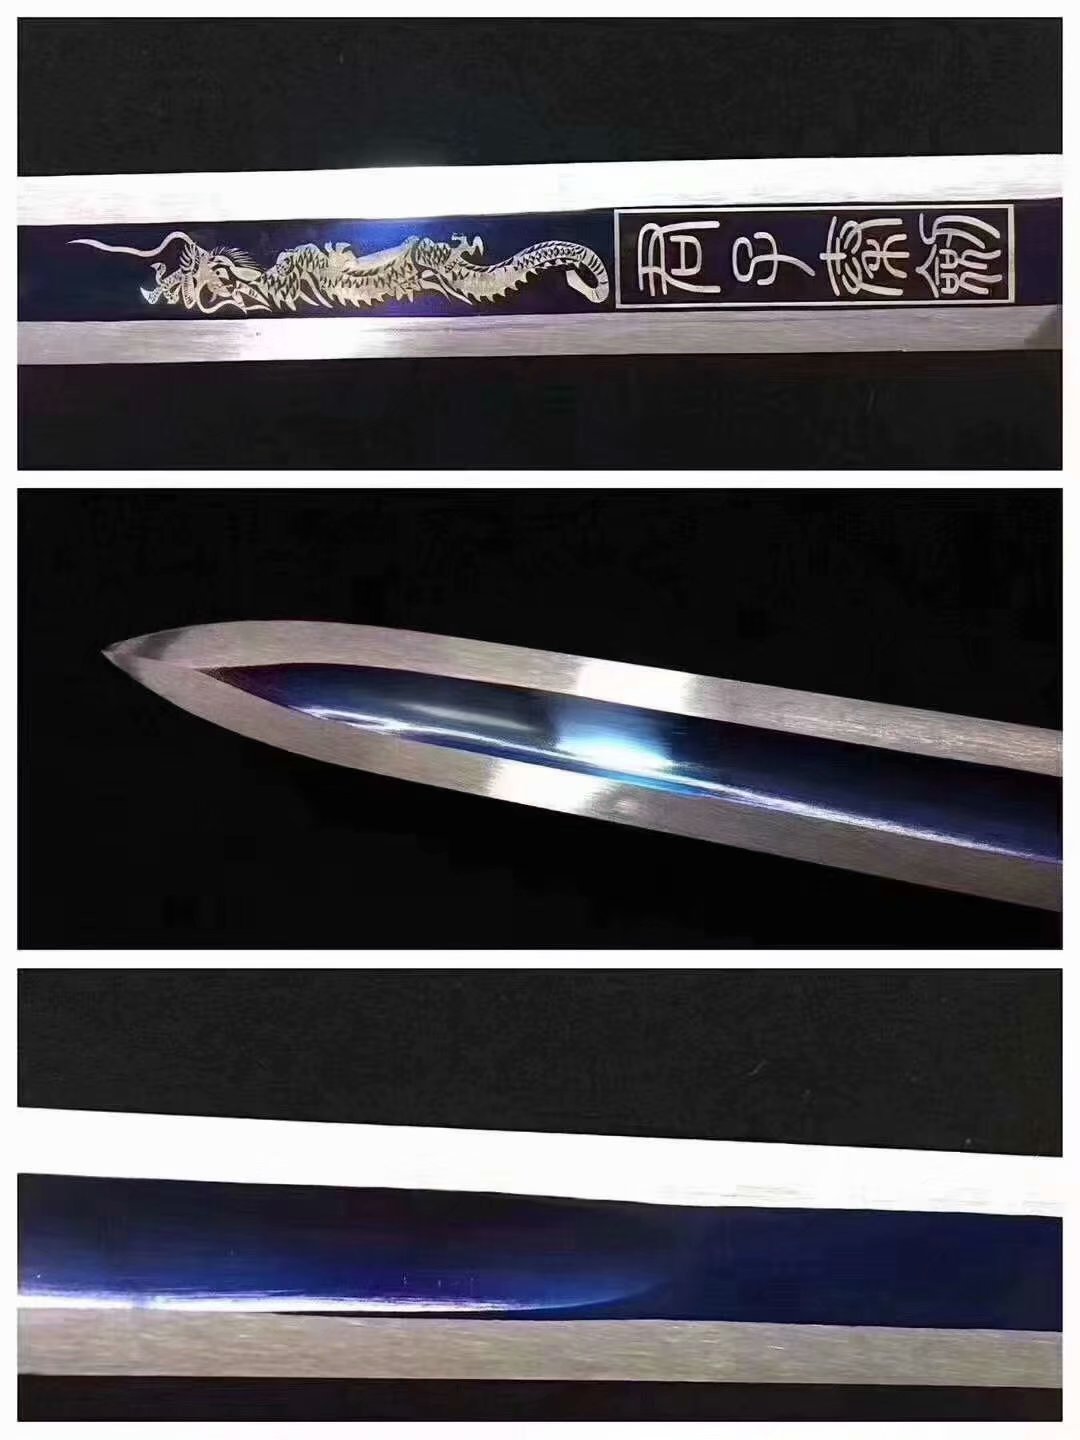 Ruyi jian sword,Forged High carbon steel bule blade,Alloy fittings